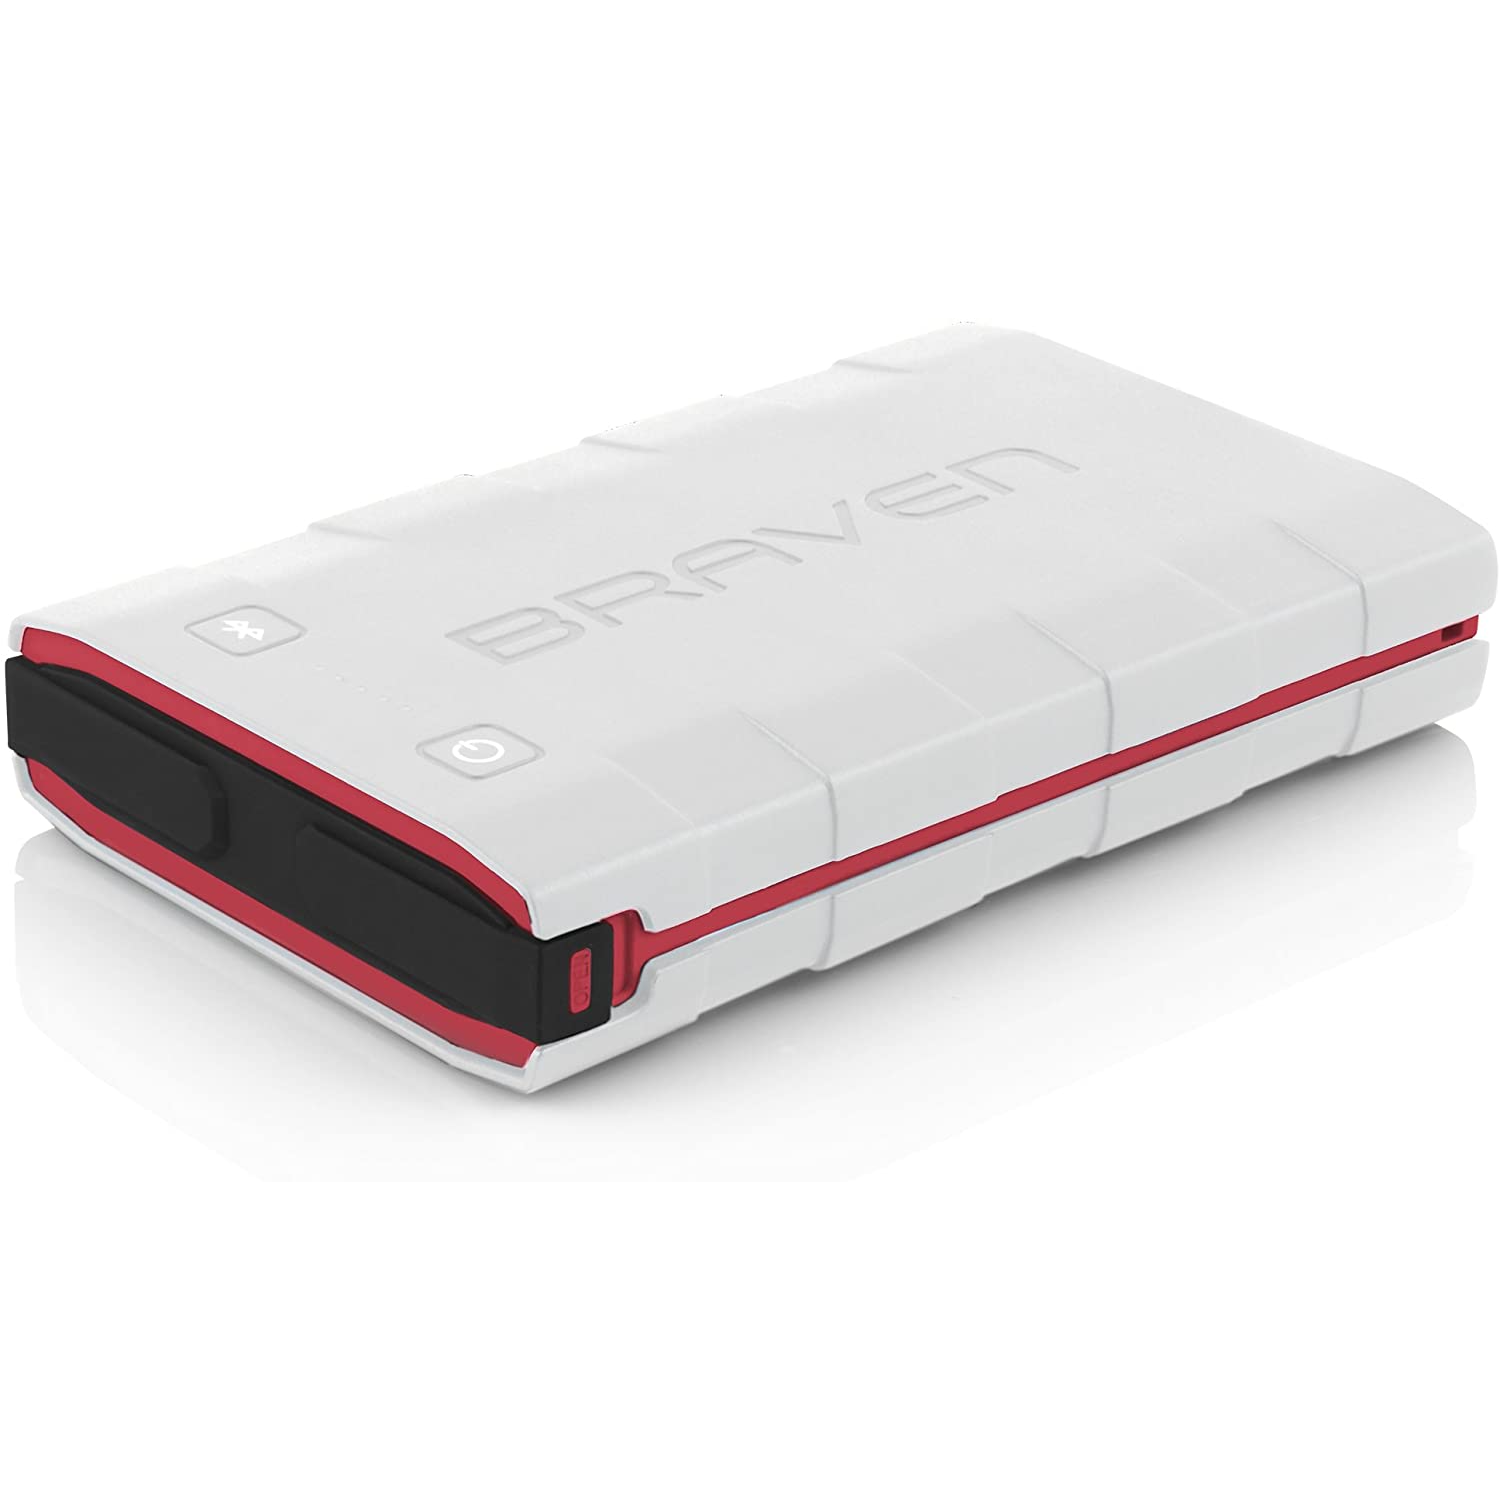 Braven BRV-Bank-6000 mAh Smart, Ultra-Rugged Portable Backup Battery-Gray/red